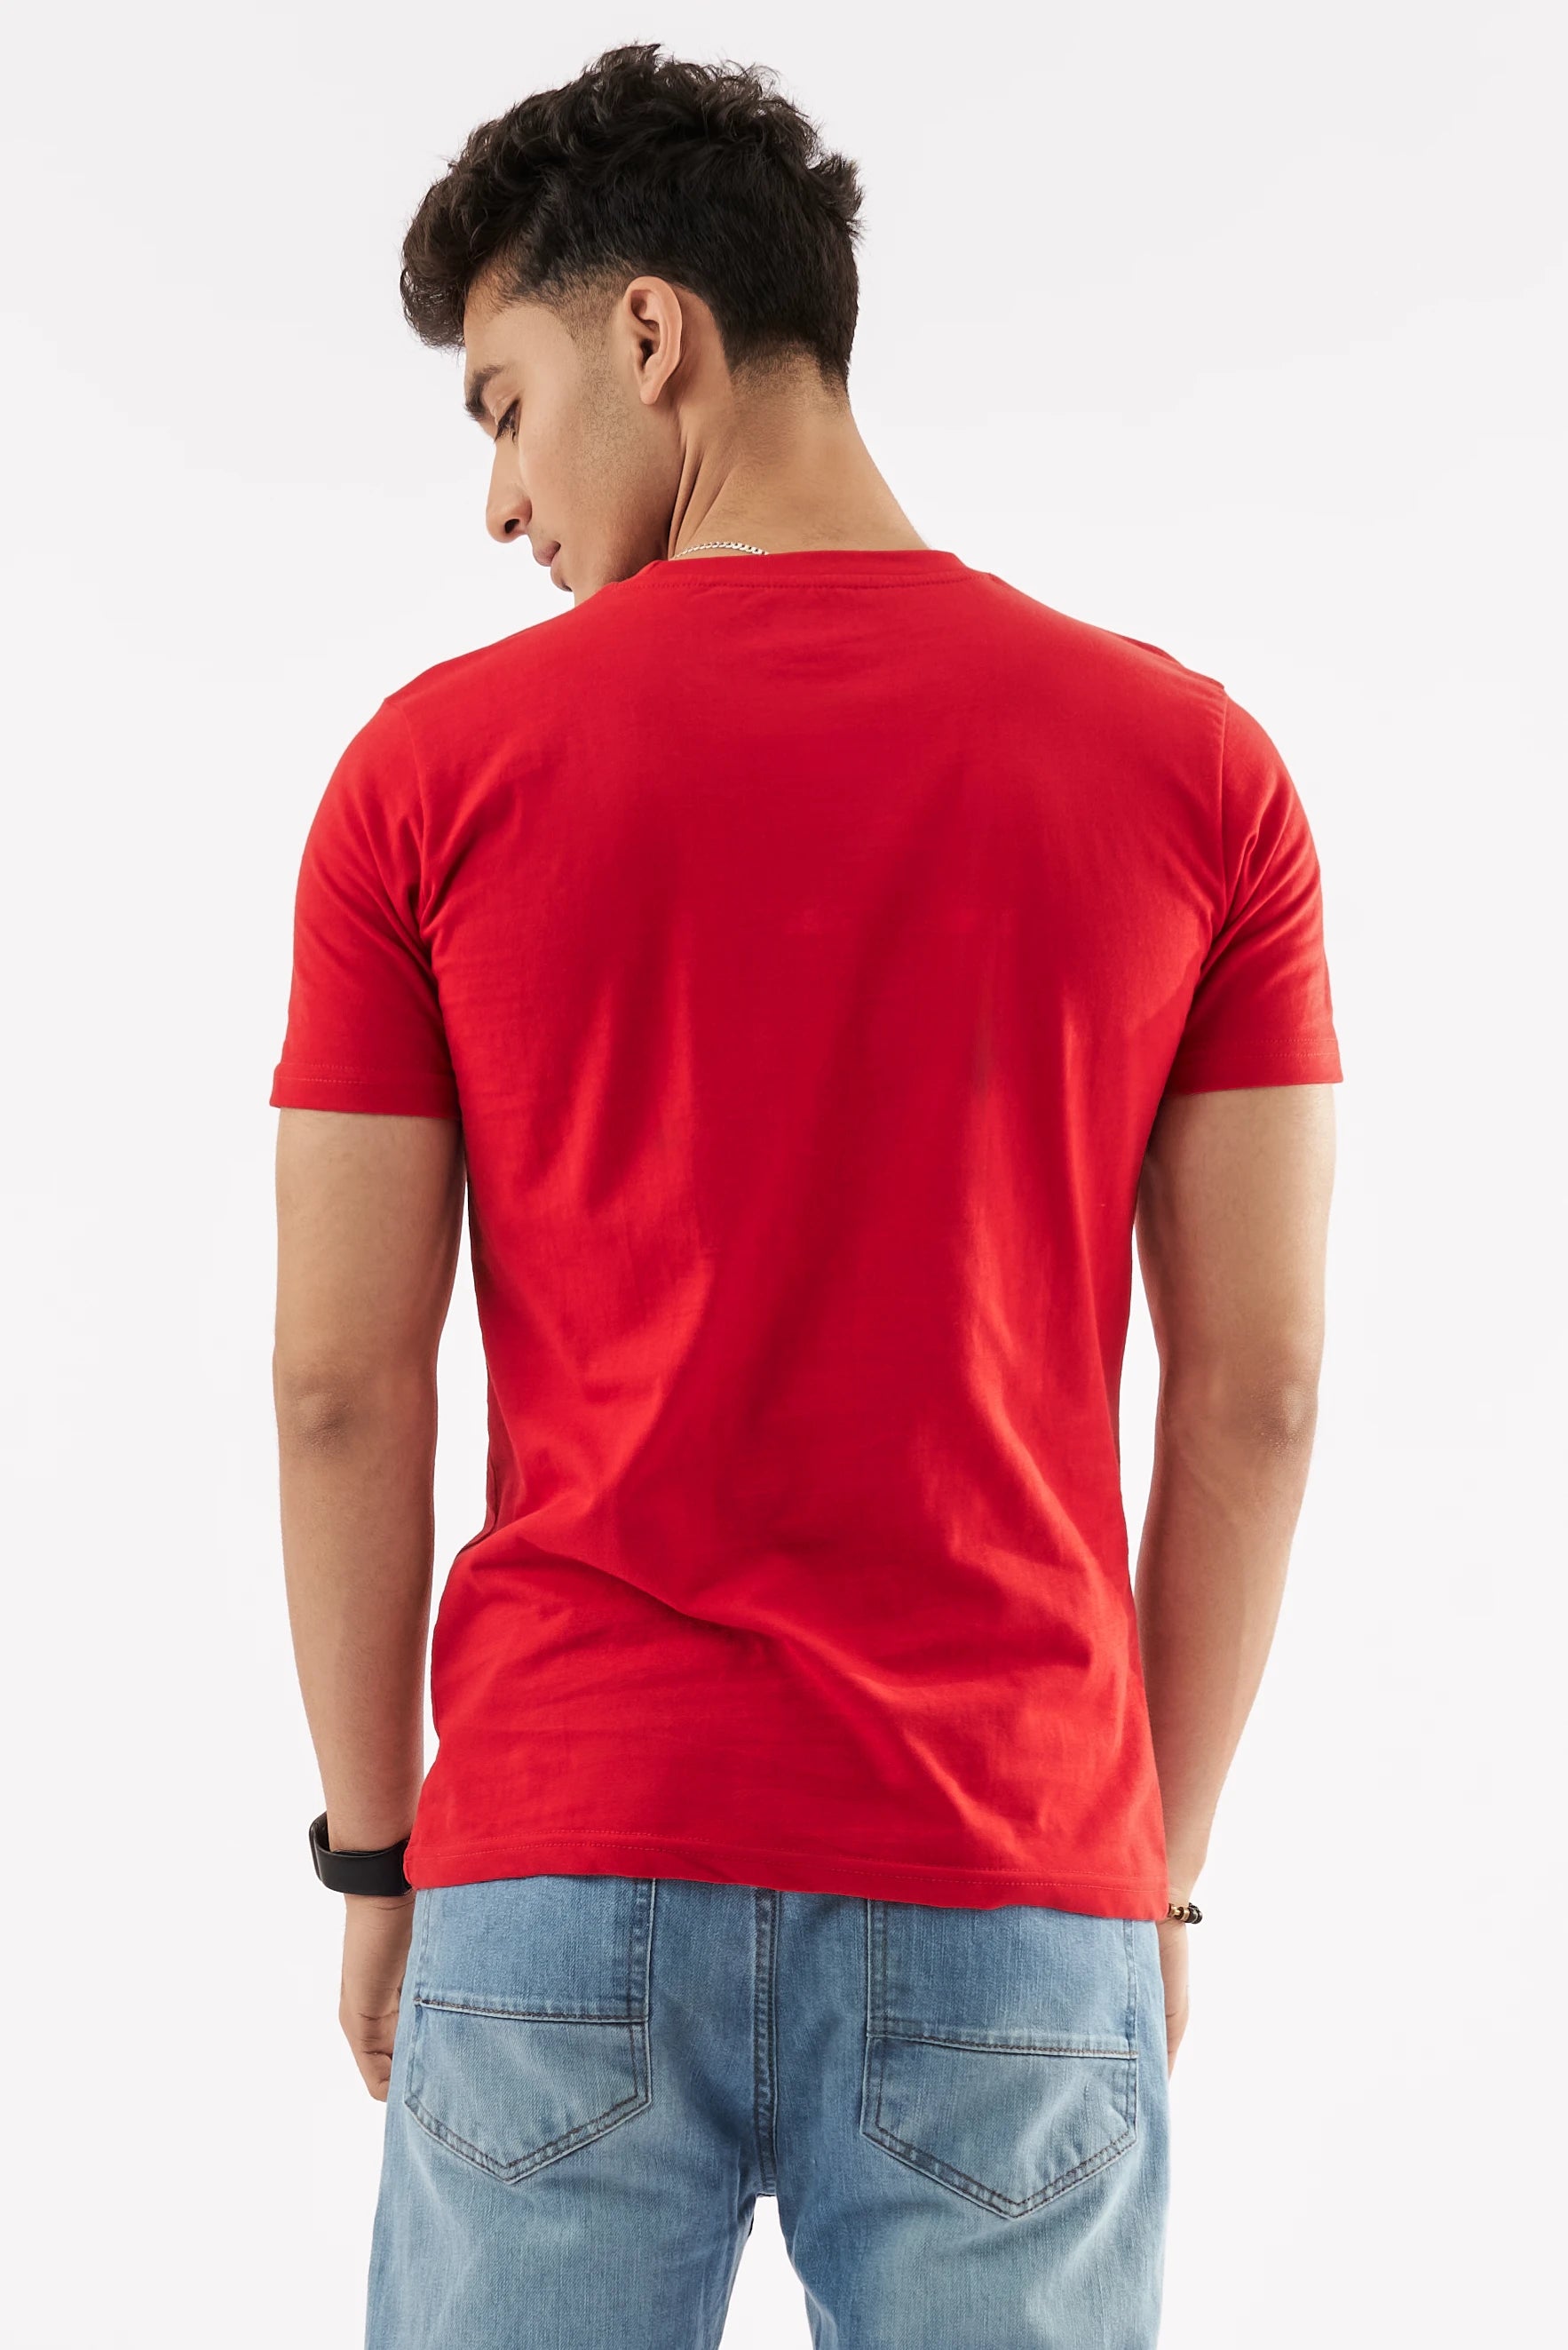 Men's Statement T-Shirt Red